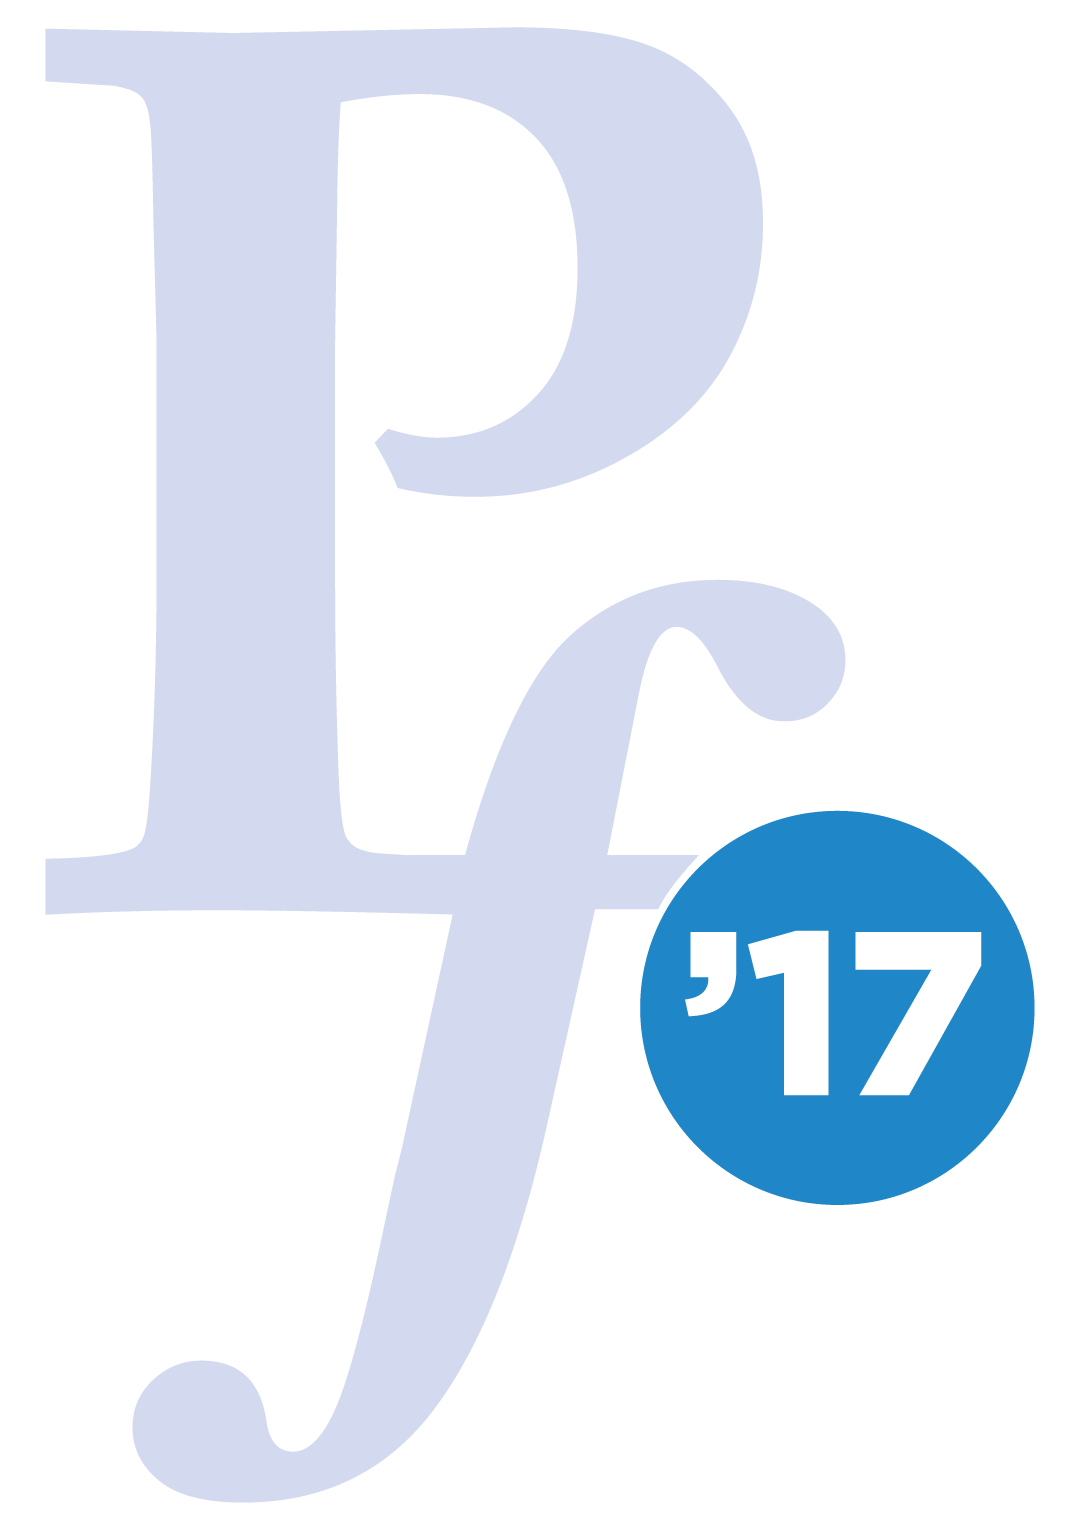 logo pf17